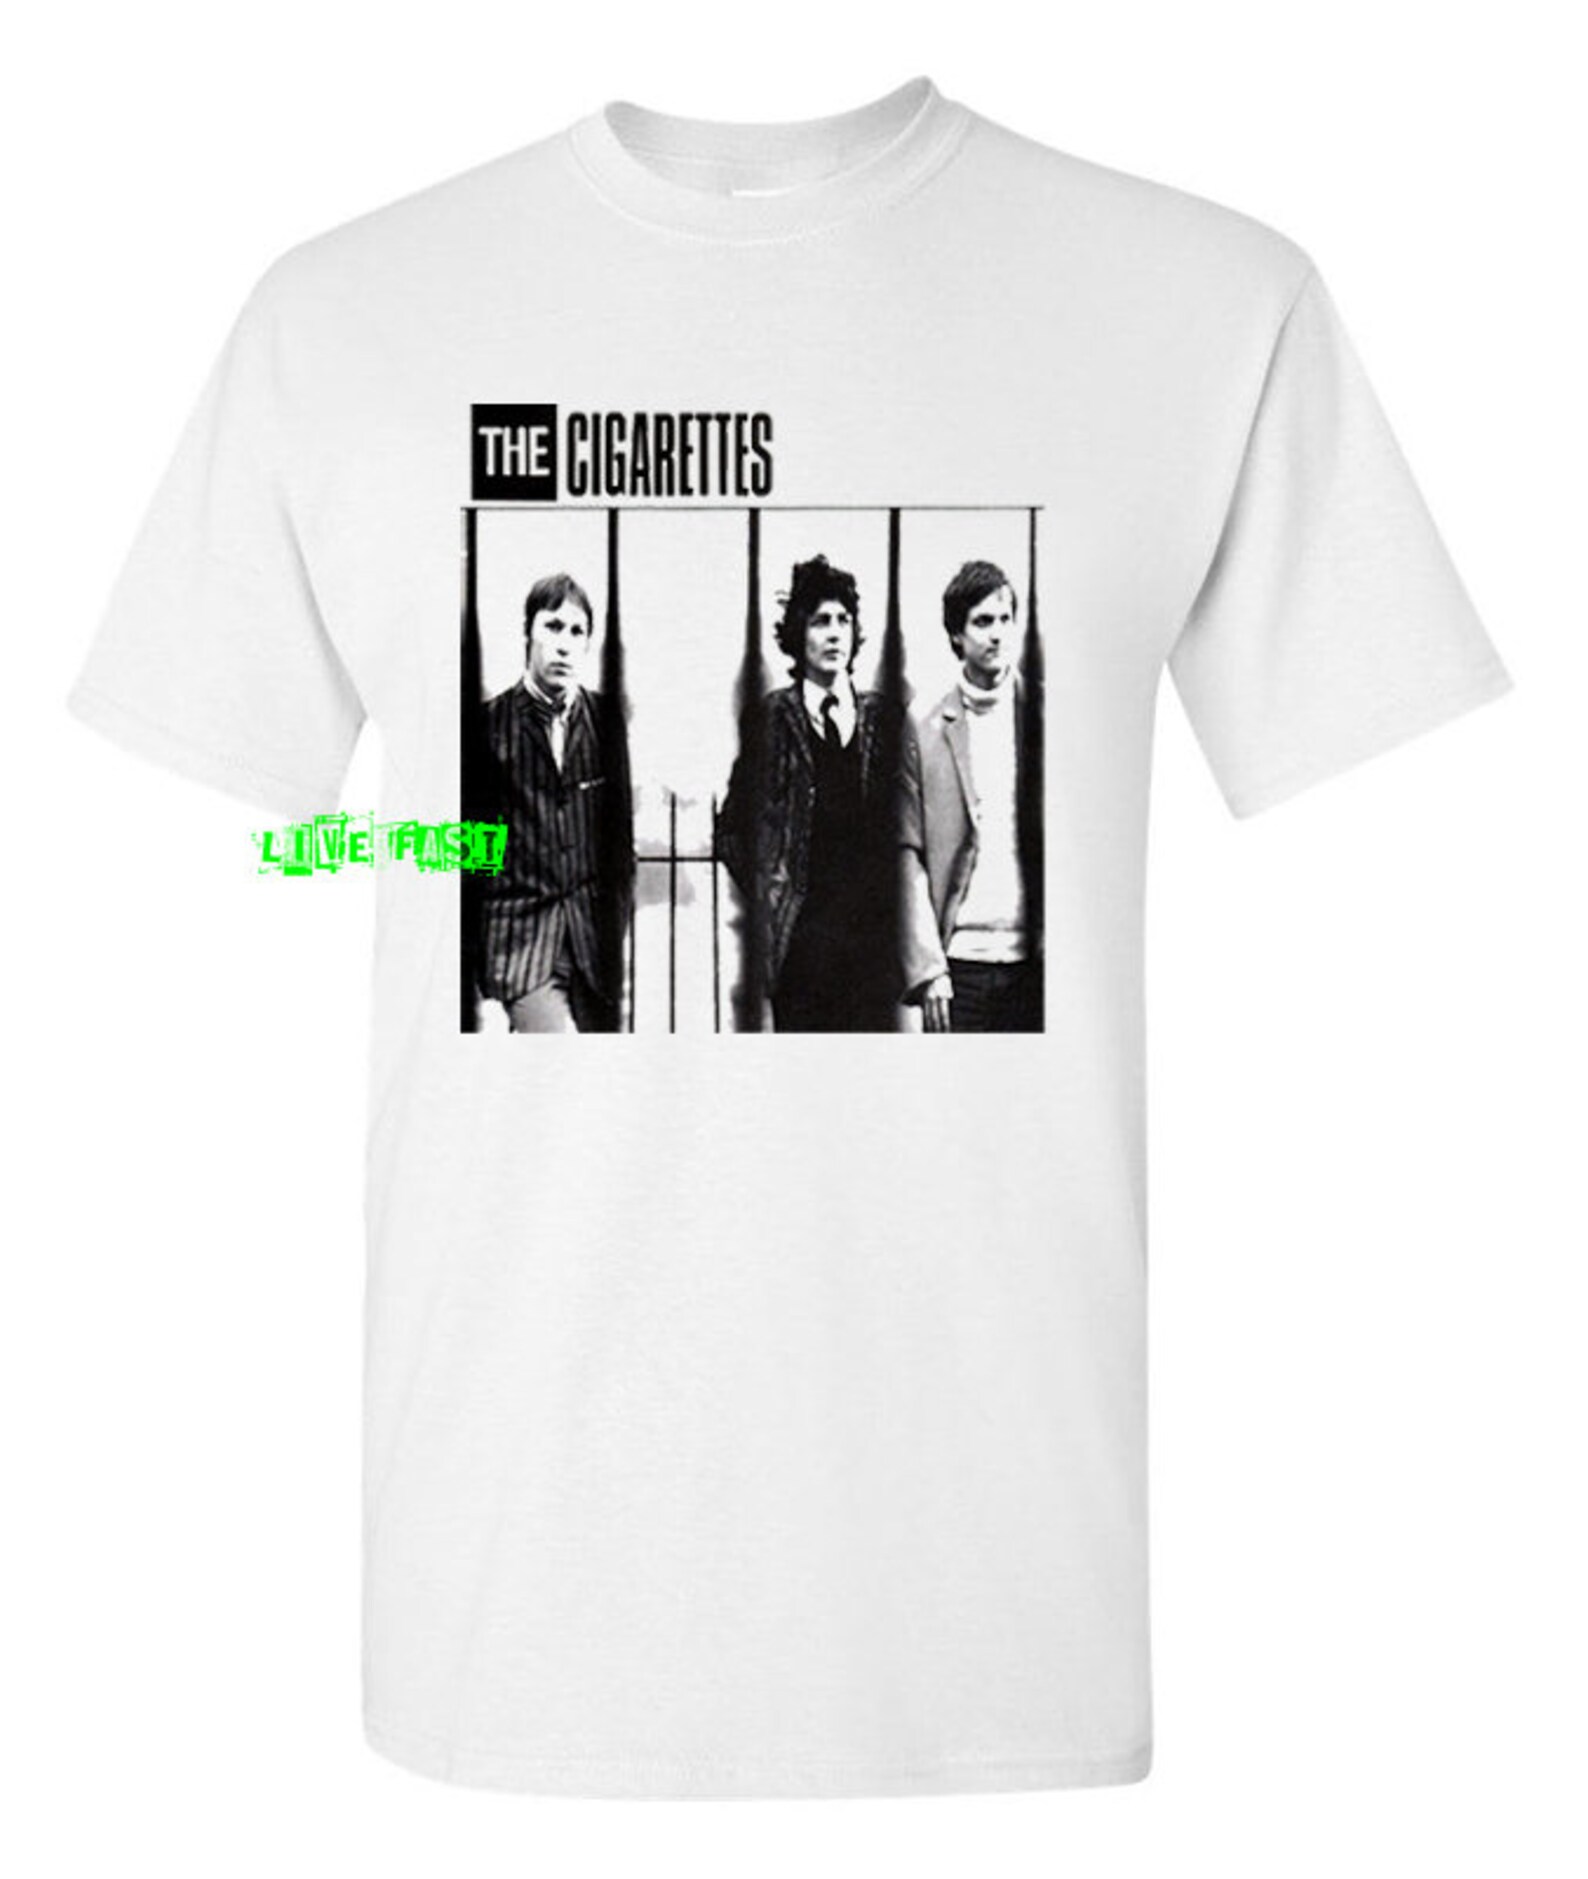 THE CIGARETTES Band T Shirt punk rock mod power pop uk | Etsy